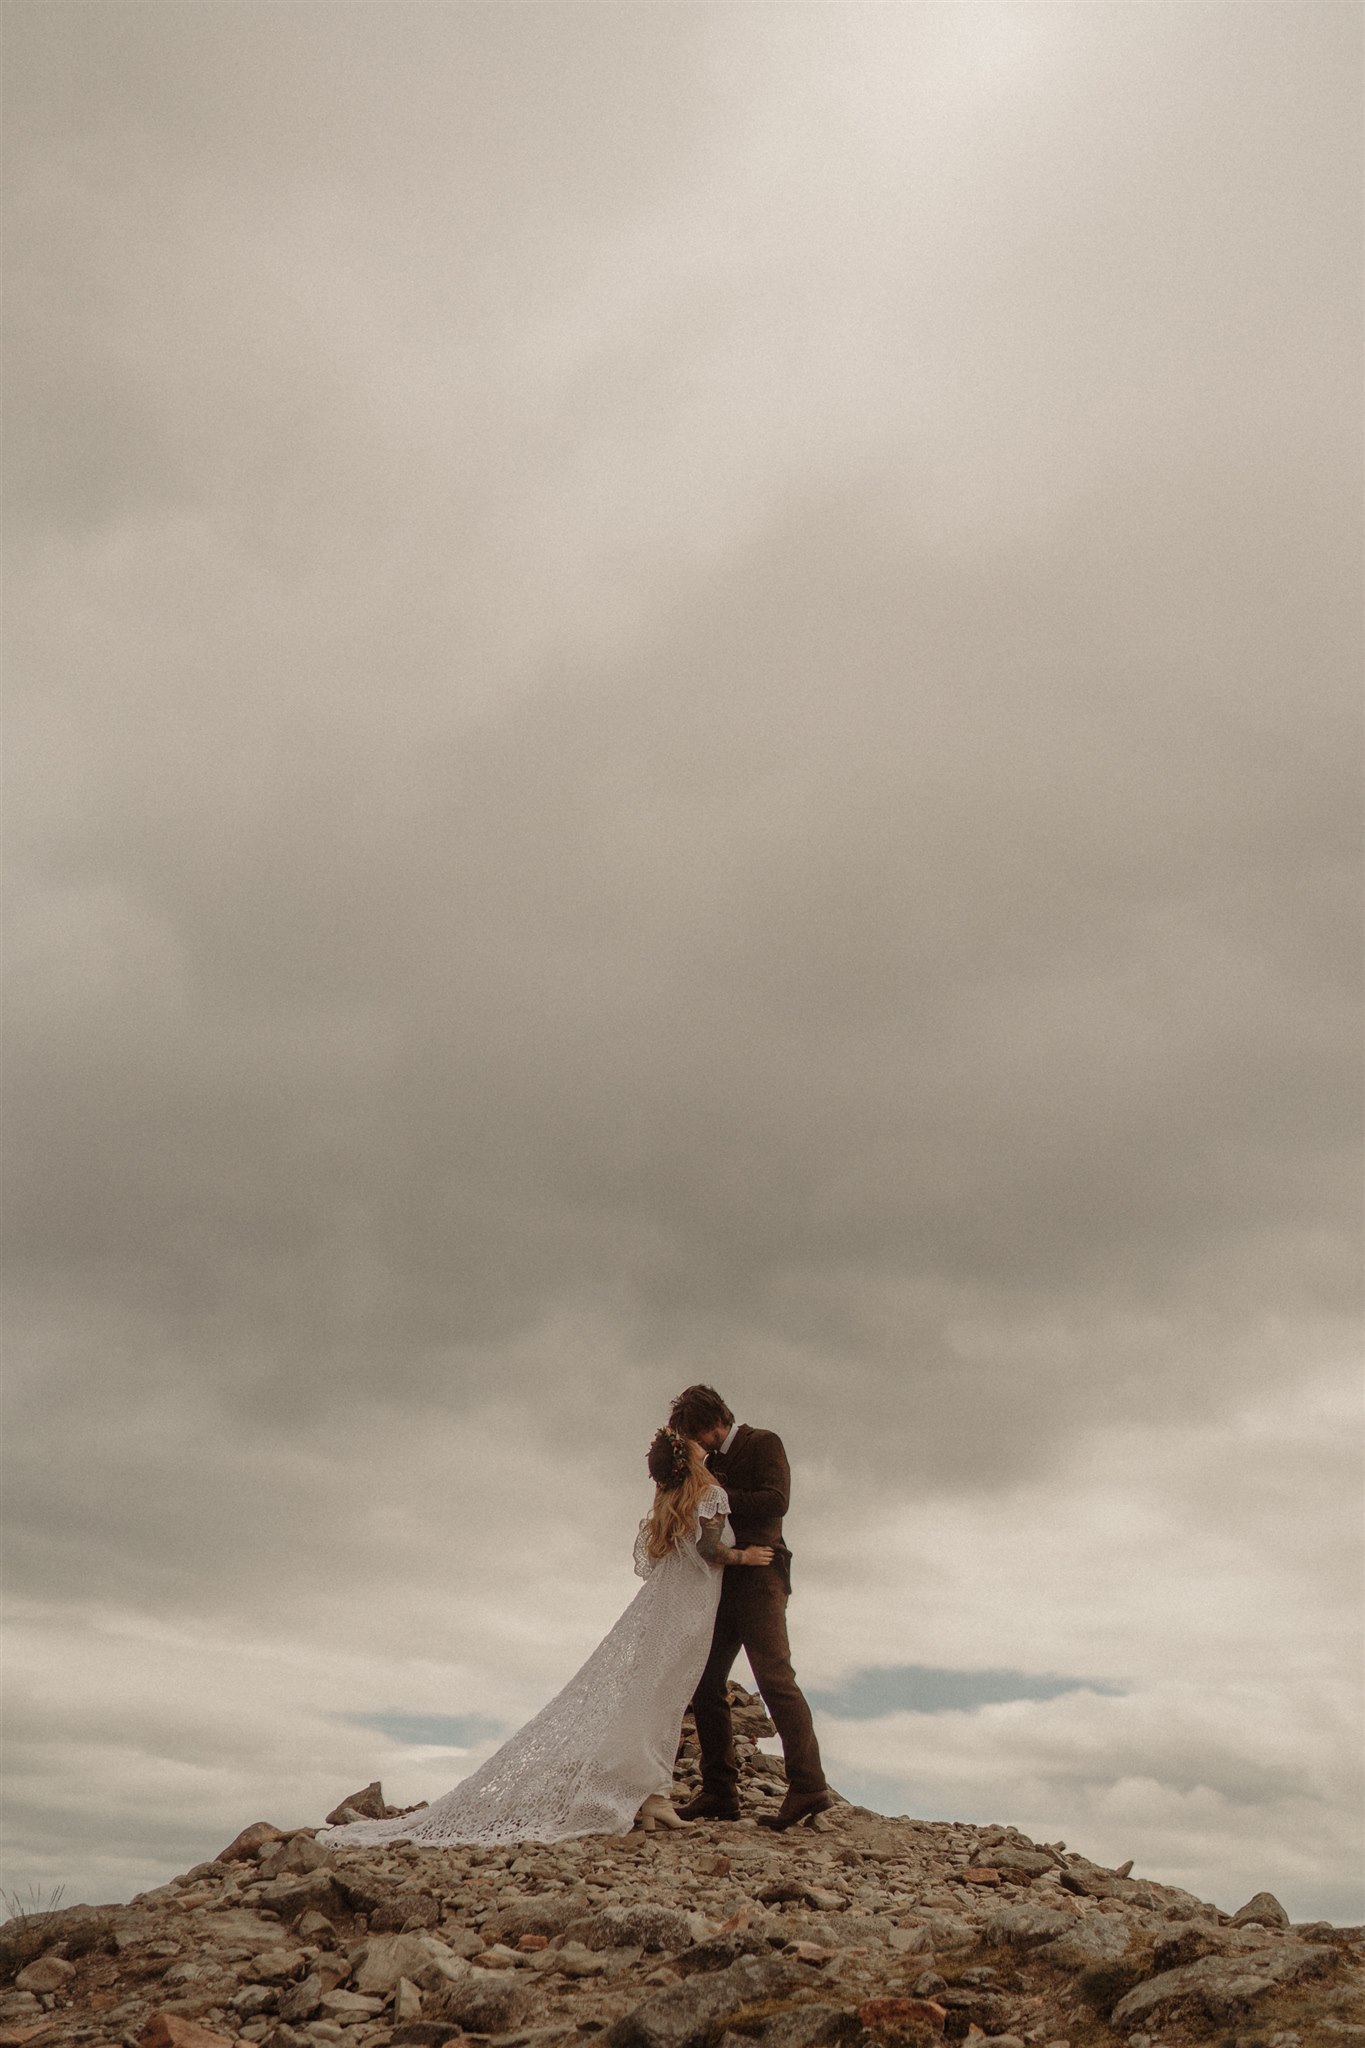 scottish highlands wedding photos - artistic wedding photos - nature wedding photos - romantic wedding photos